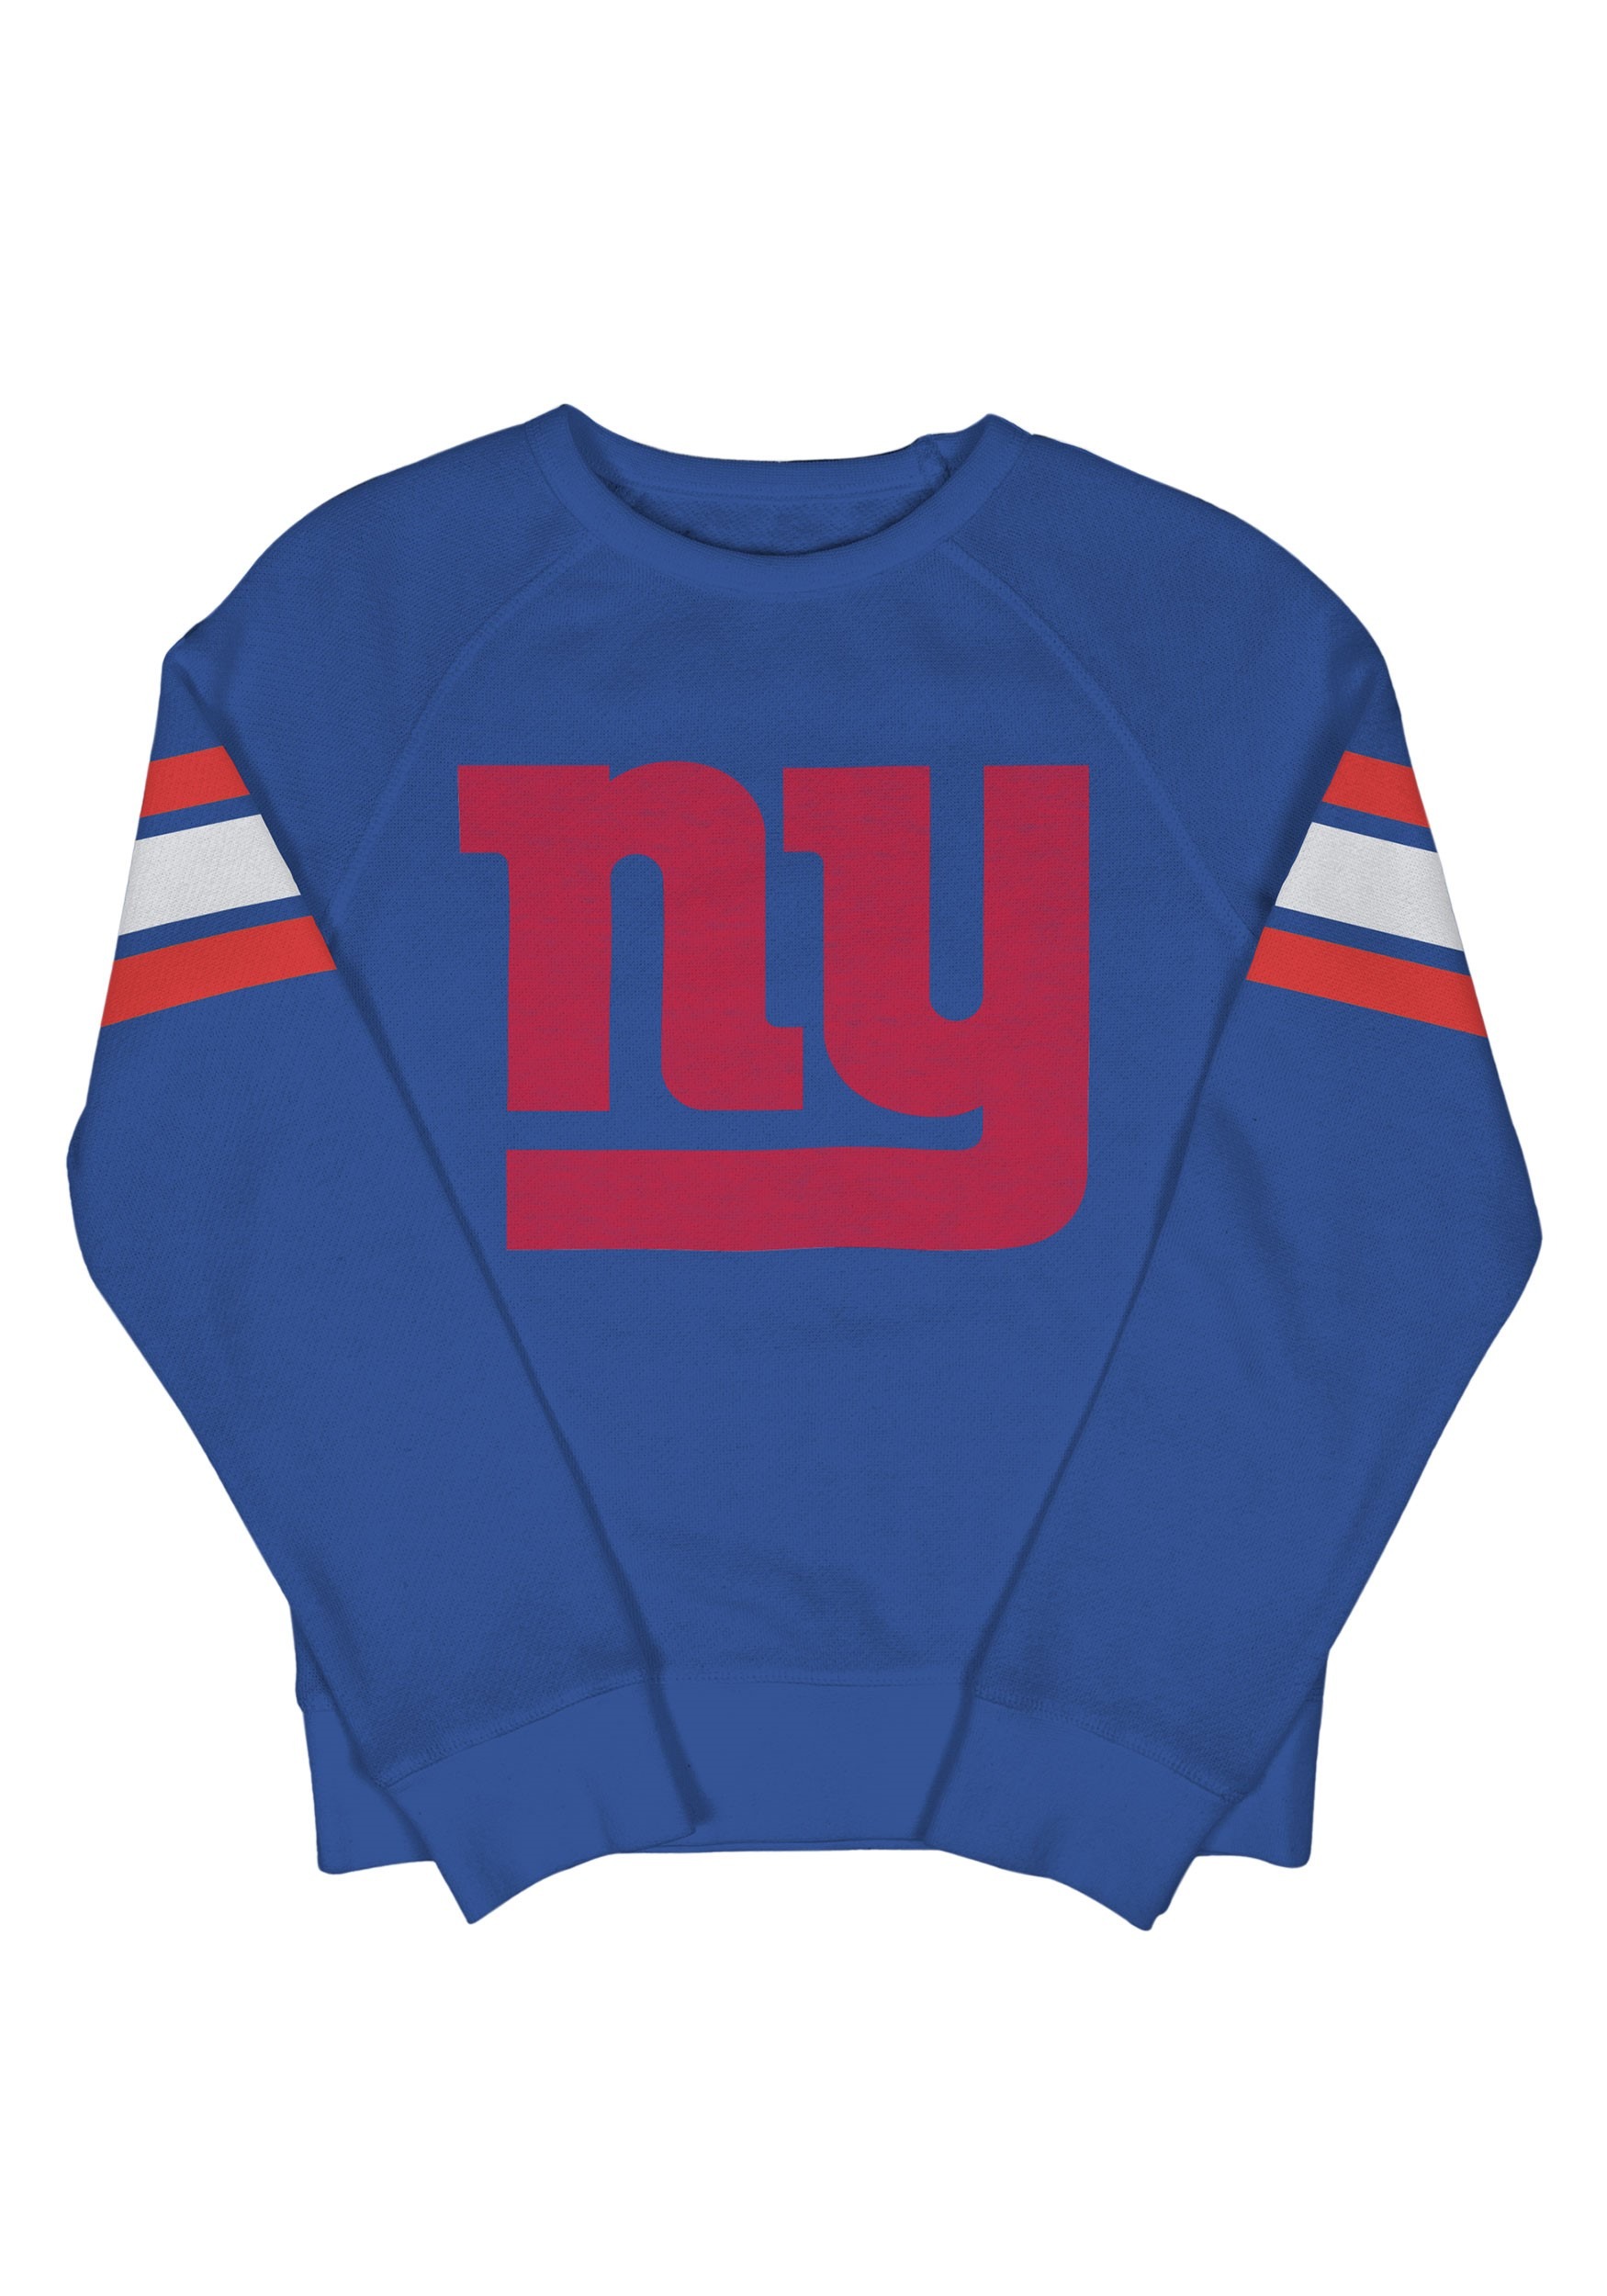 New York Giants Kids Fleece Blue Crewneck Sweater